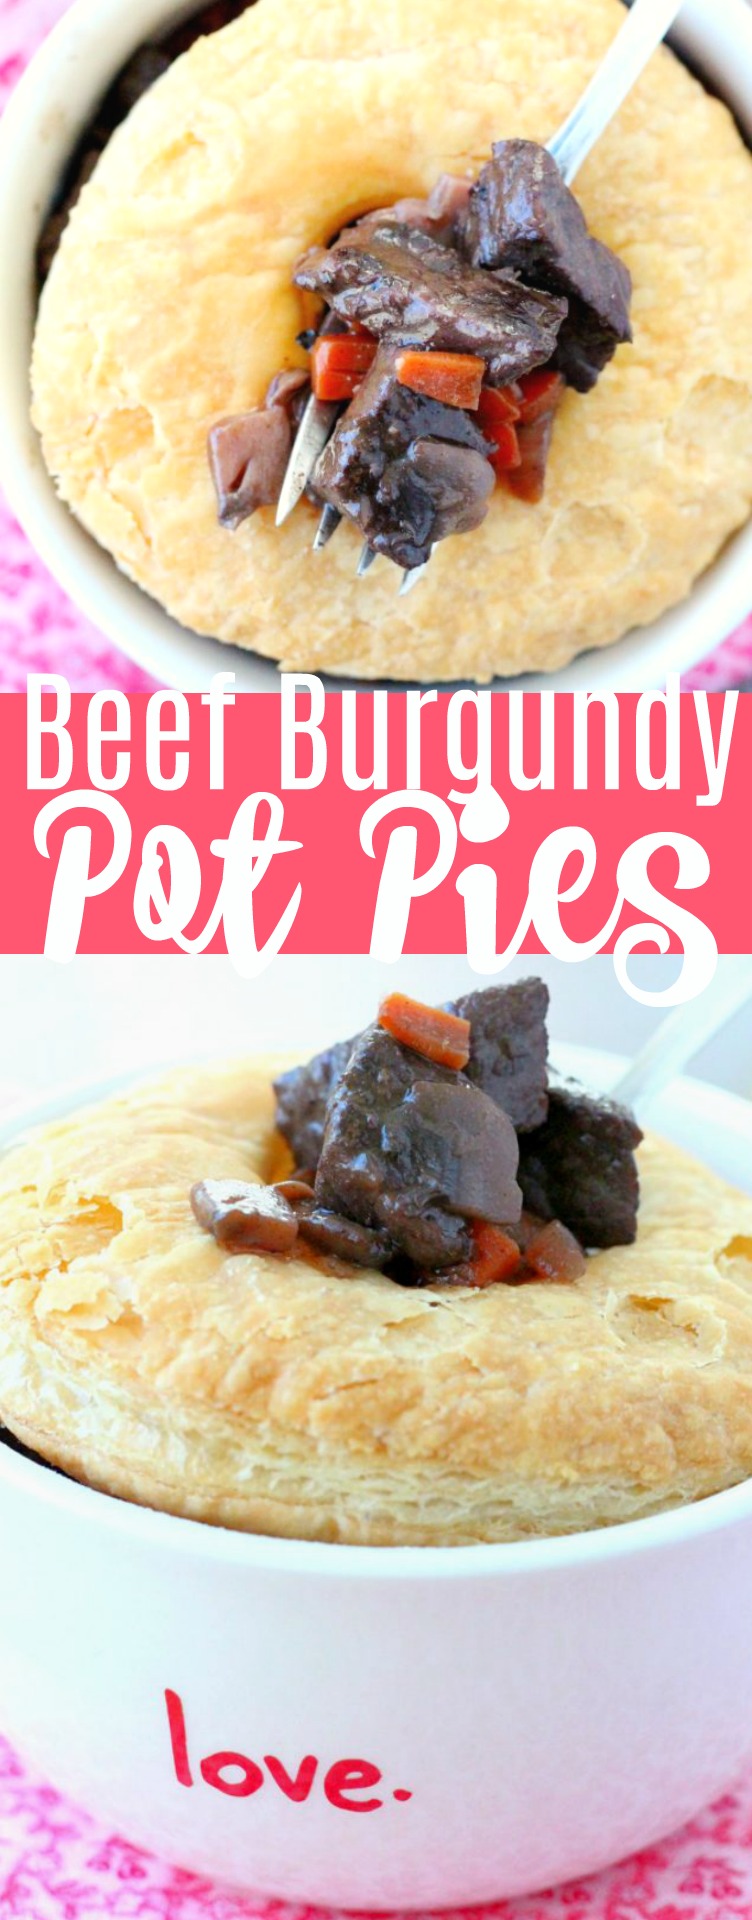 Make-Ahead Beef Burgundy Pot Pies for date night | Foodtastic Mom